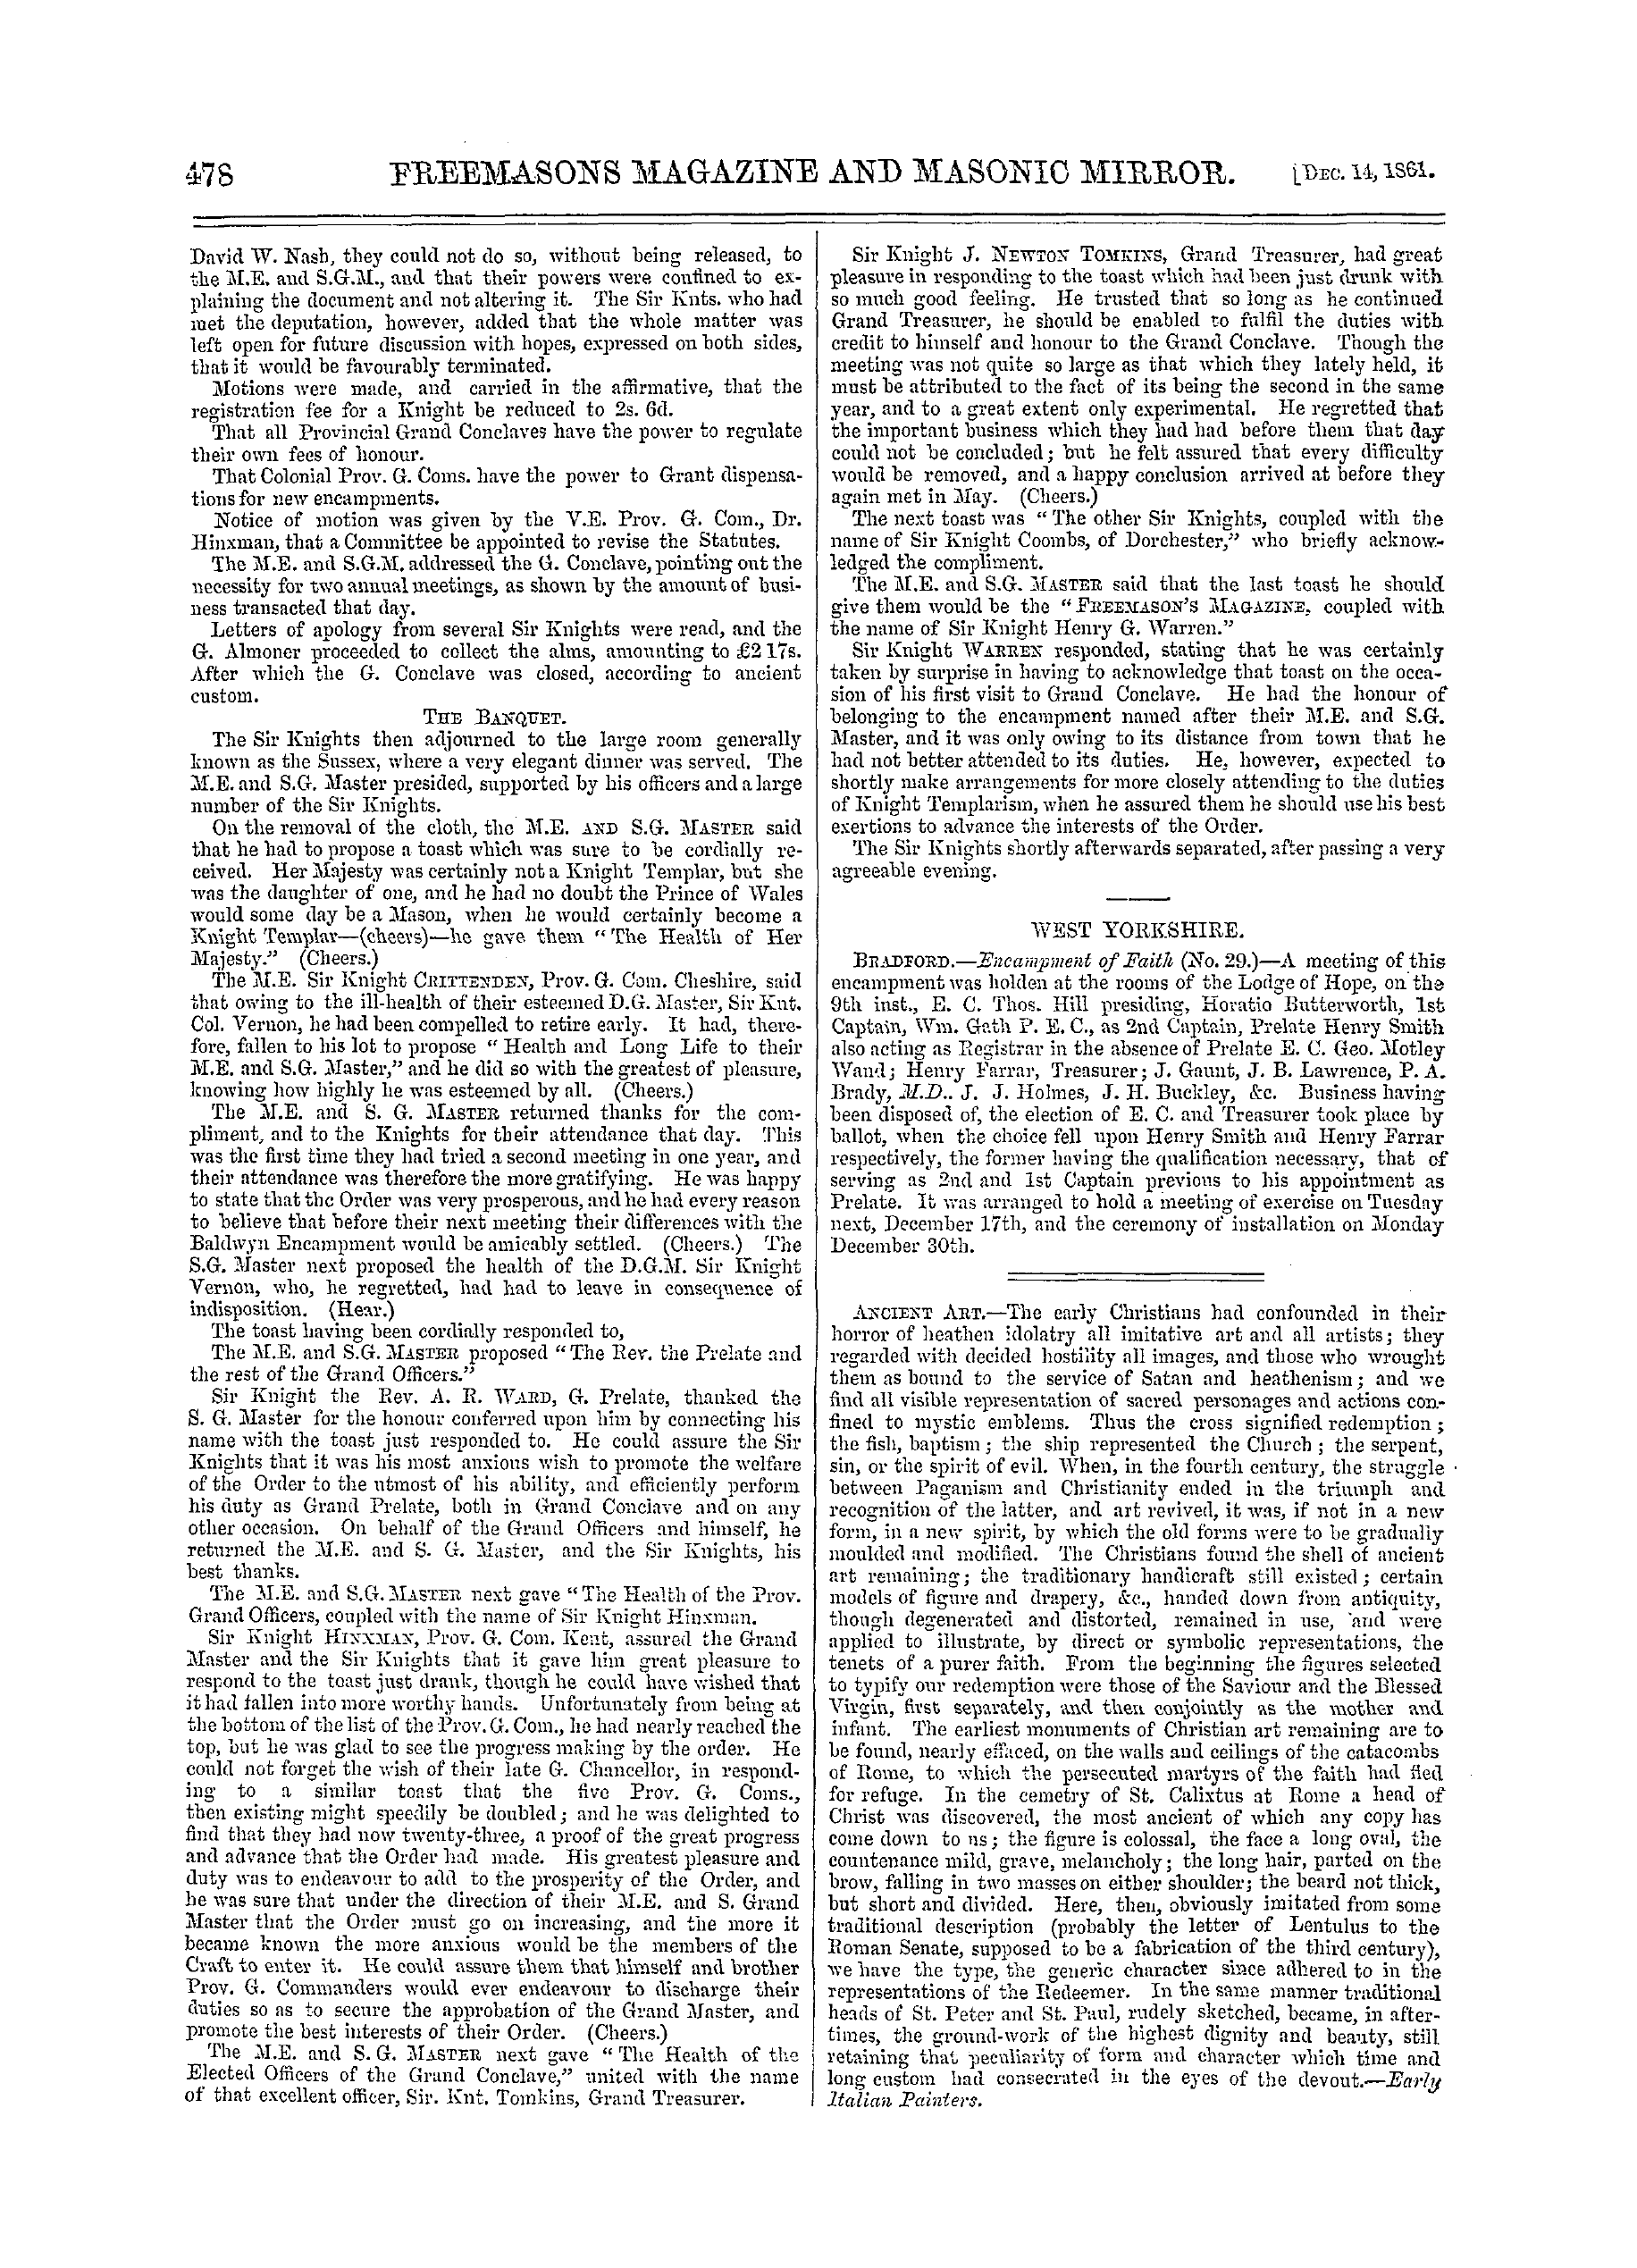 The Freemasons' Monthly Magazine: 1861-12-14 - Knights Templar.